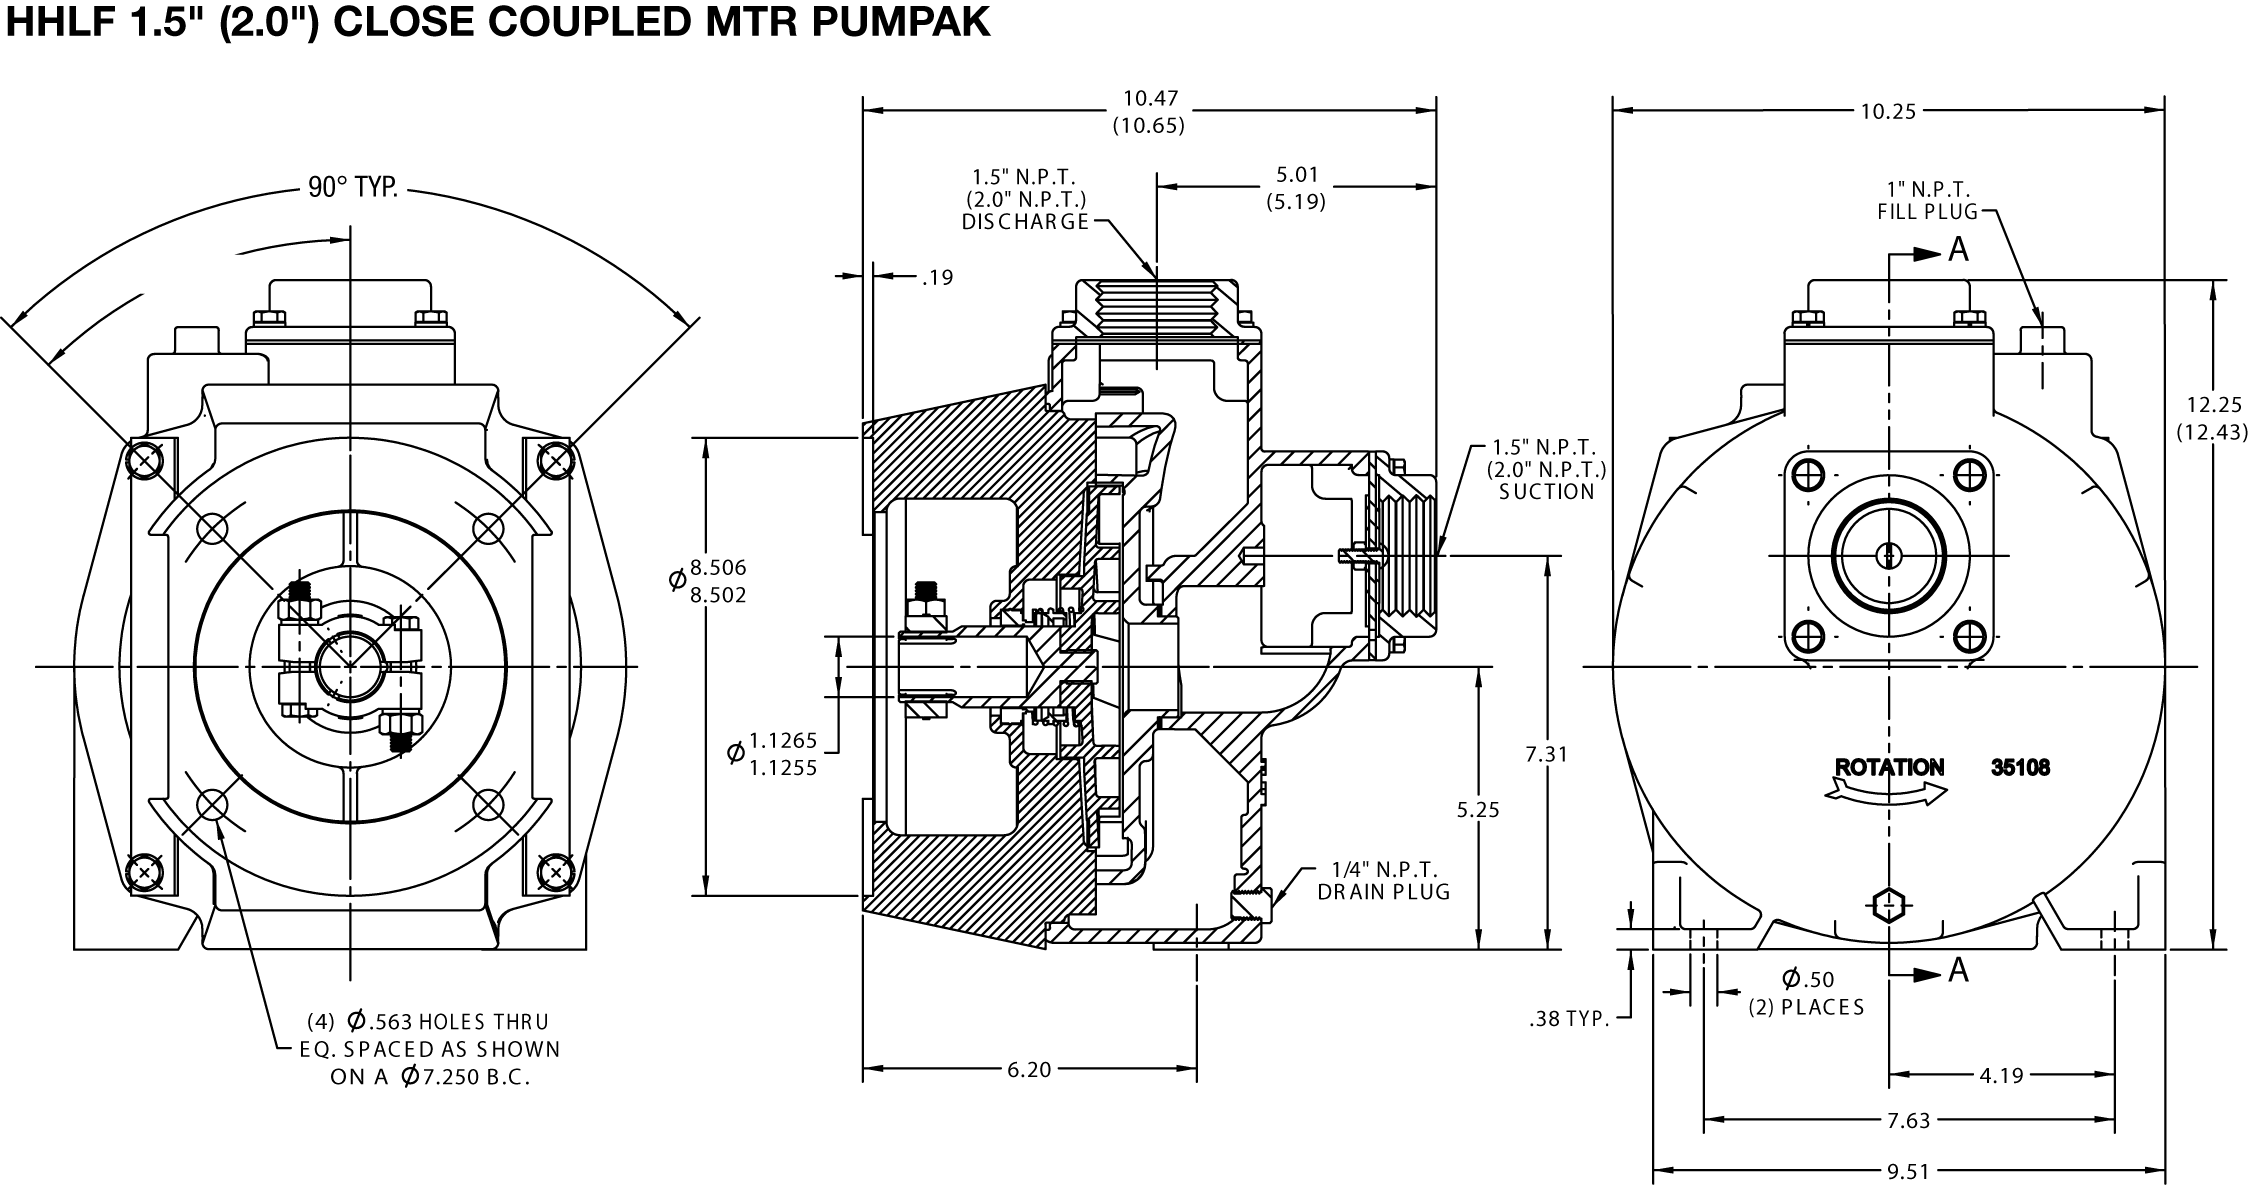 hhlf-high-pressure-water-pump_drawing-hhlf-close-coupled-mtr-pumpak